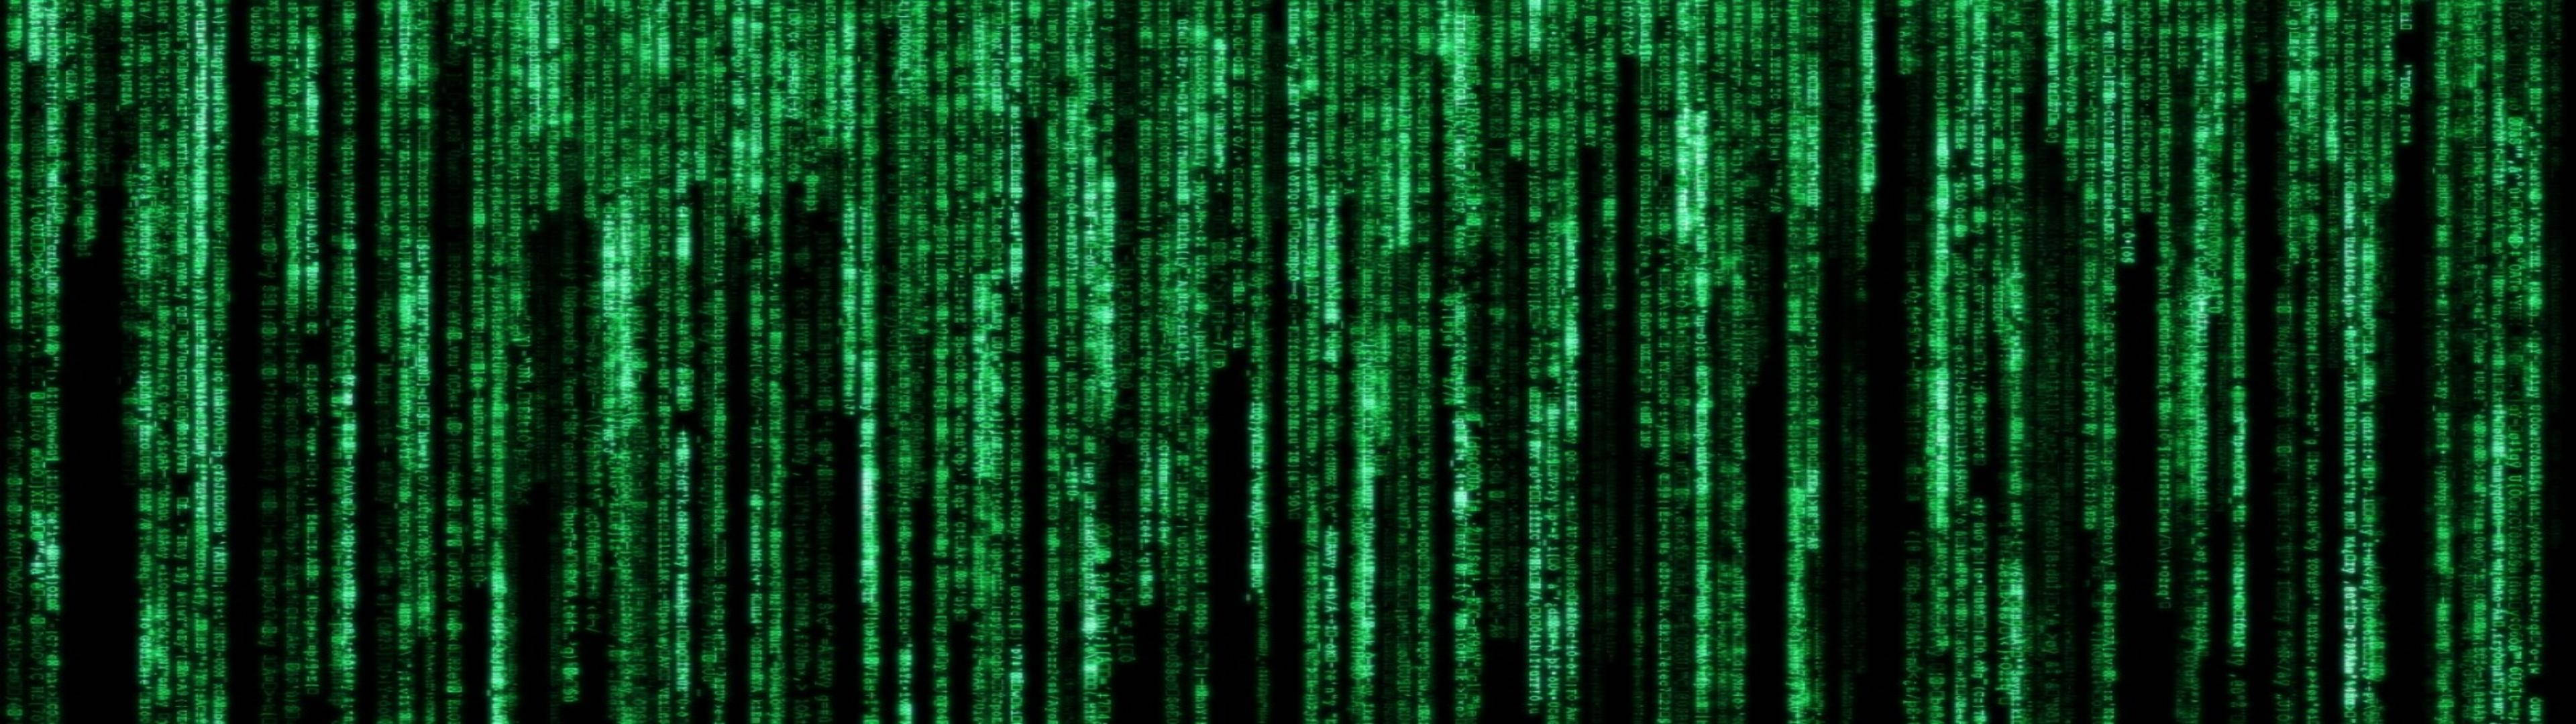 Green Binary Hacker Matrix Picture